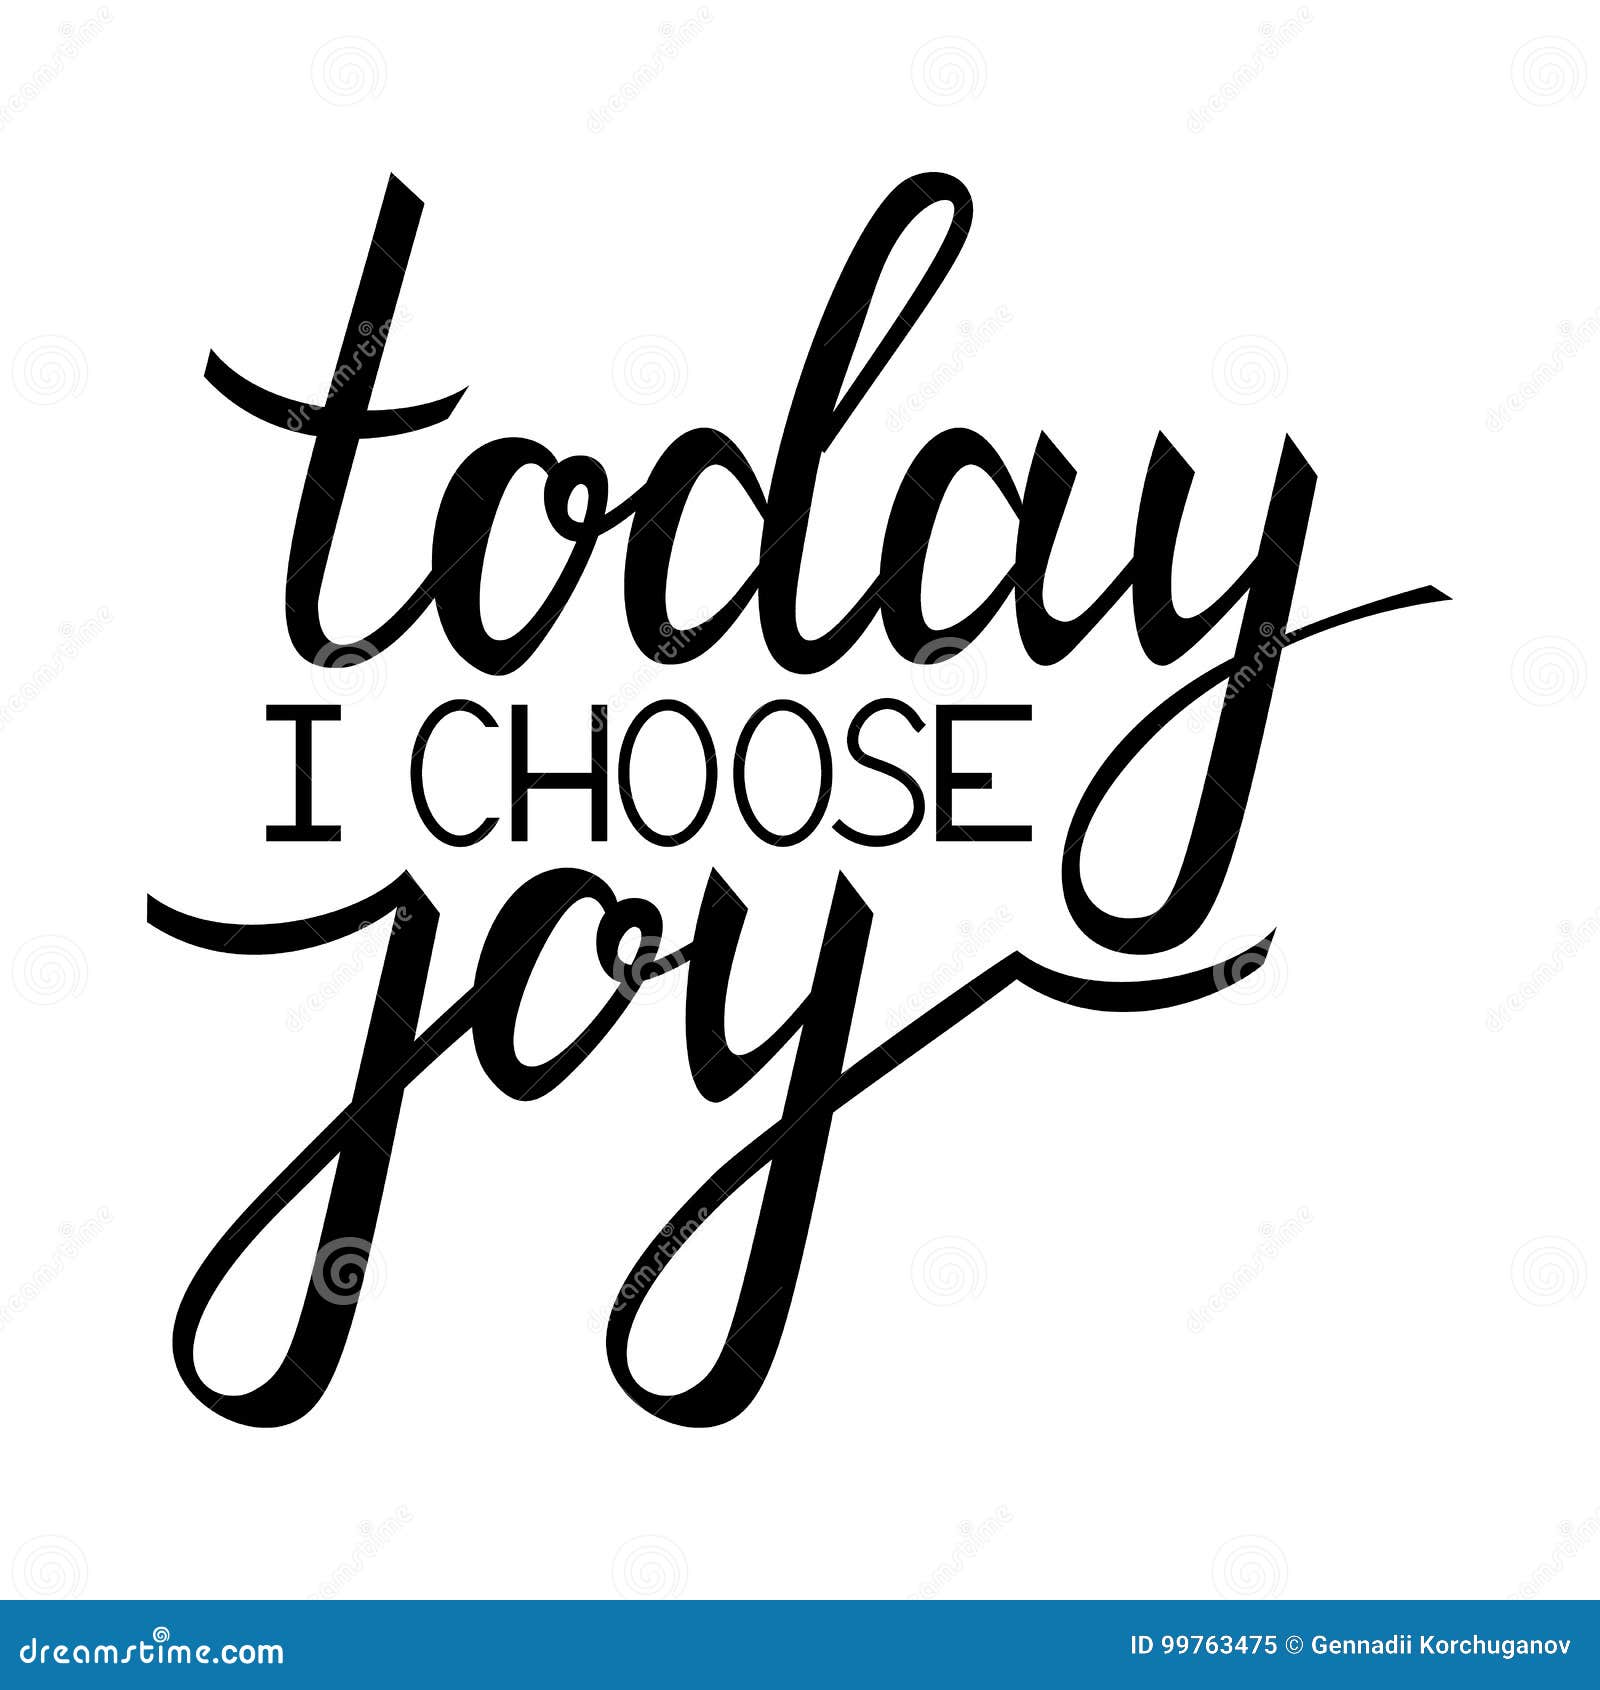 today i choose joy.